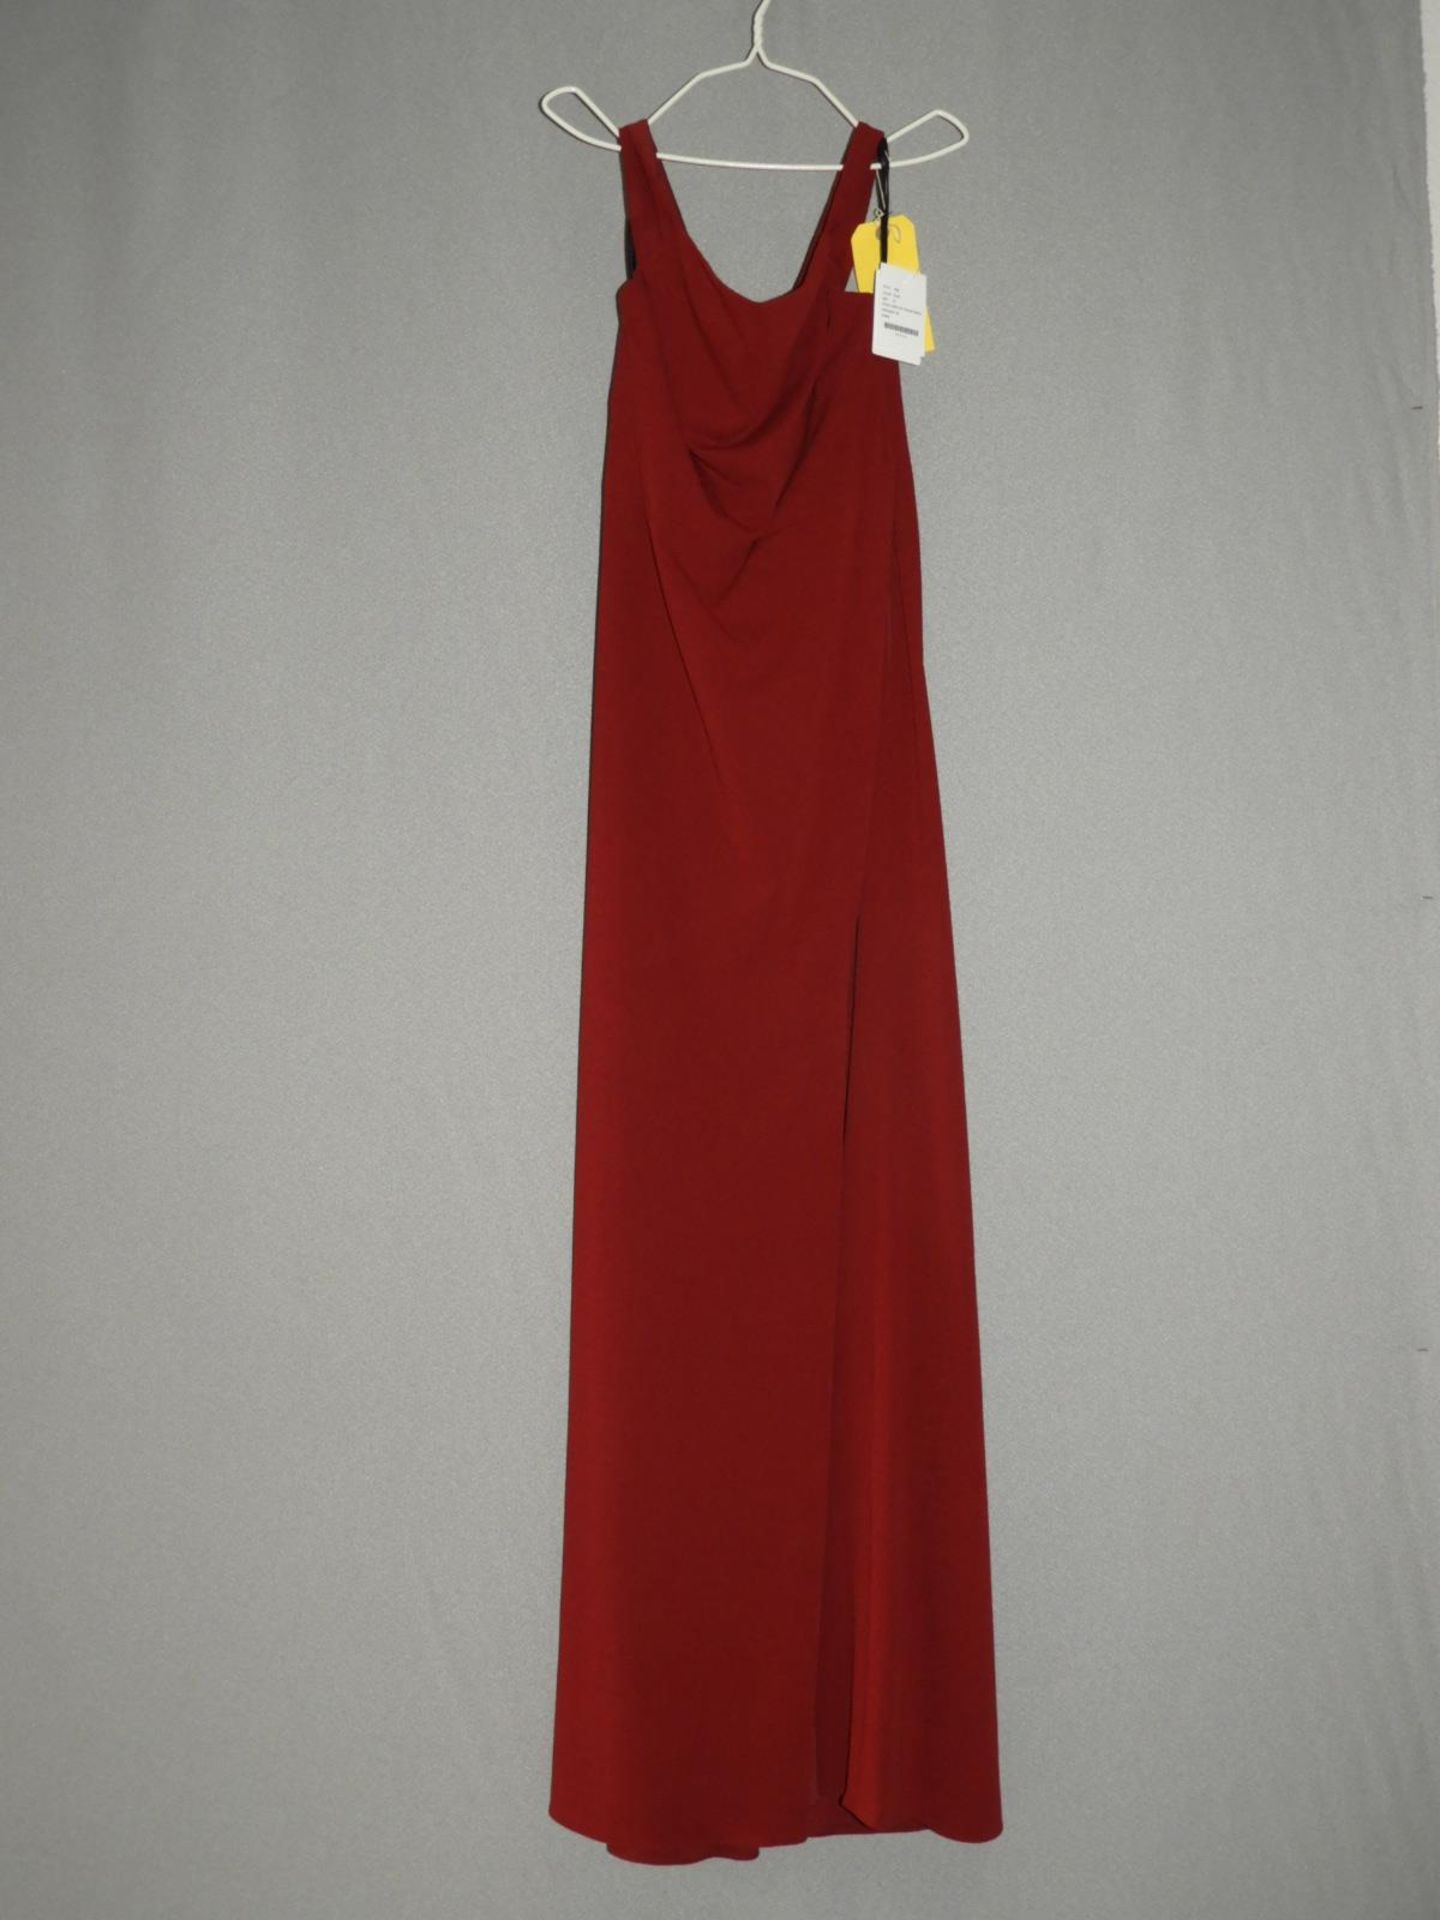 *Size: Medium Burgundy Bridesmaid Dress by After Six (290/8106)